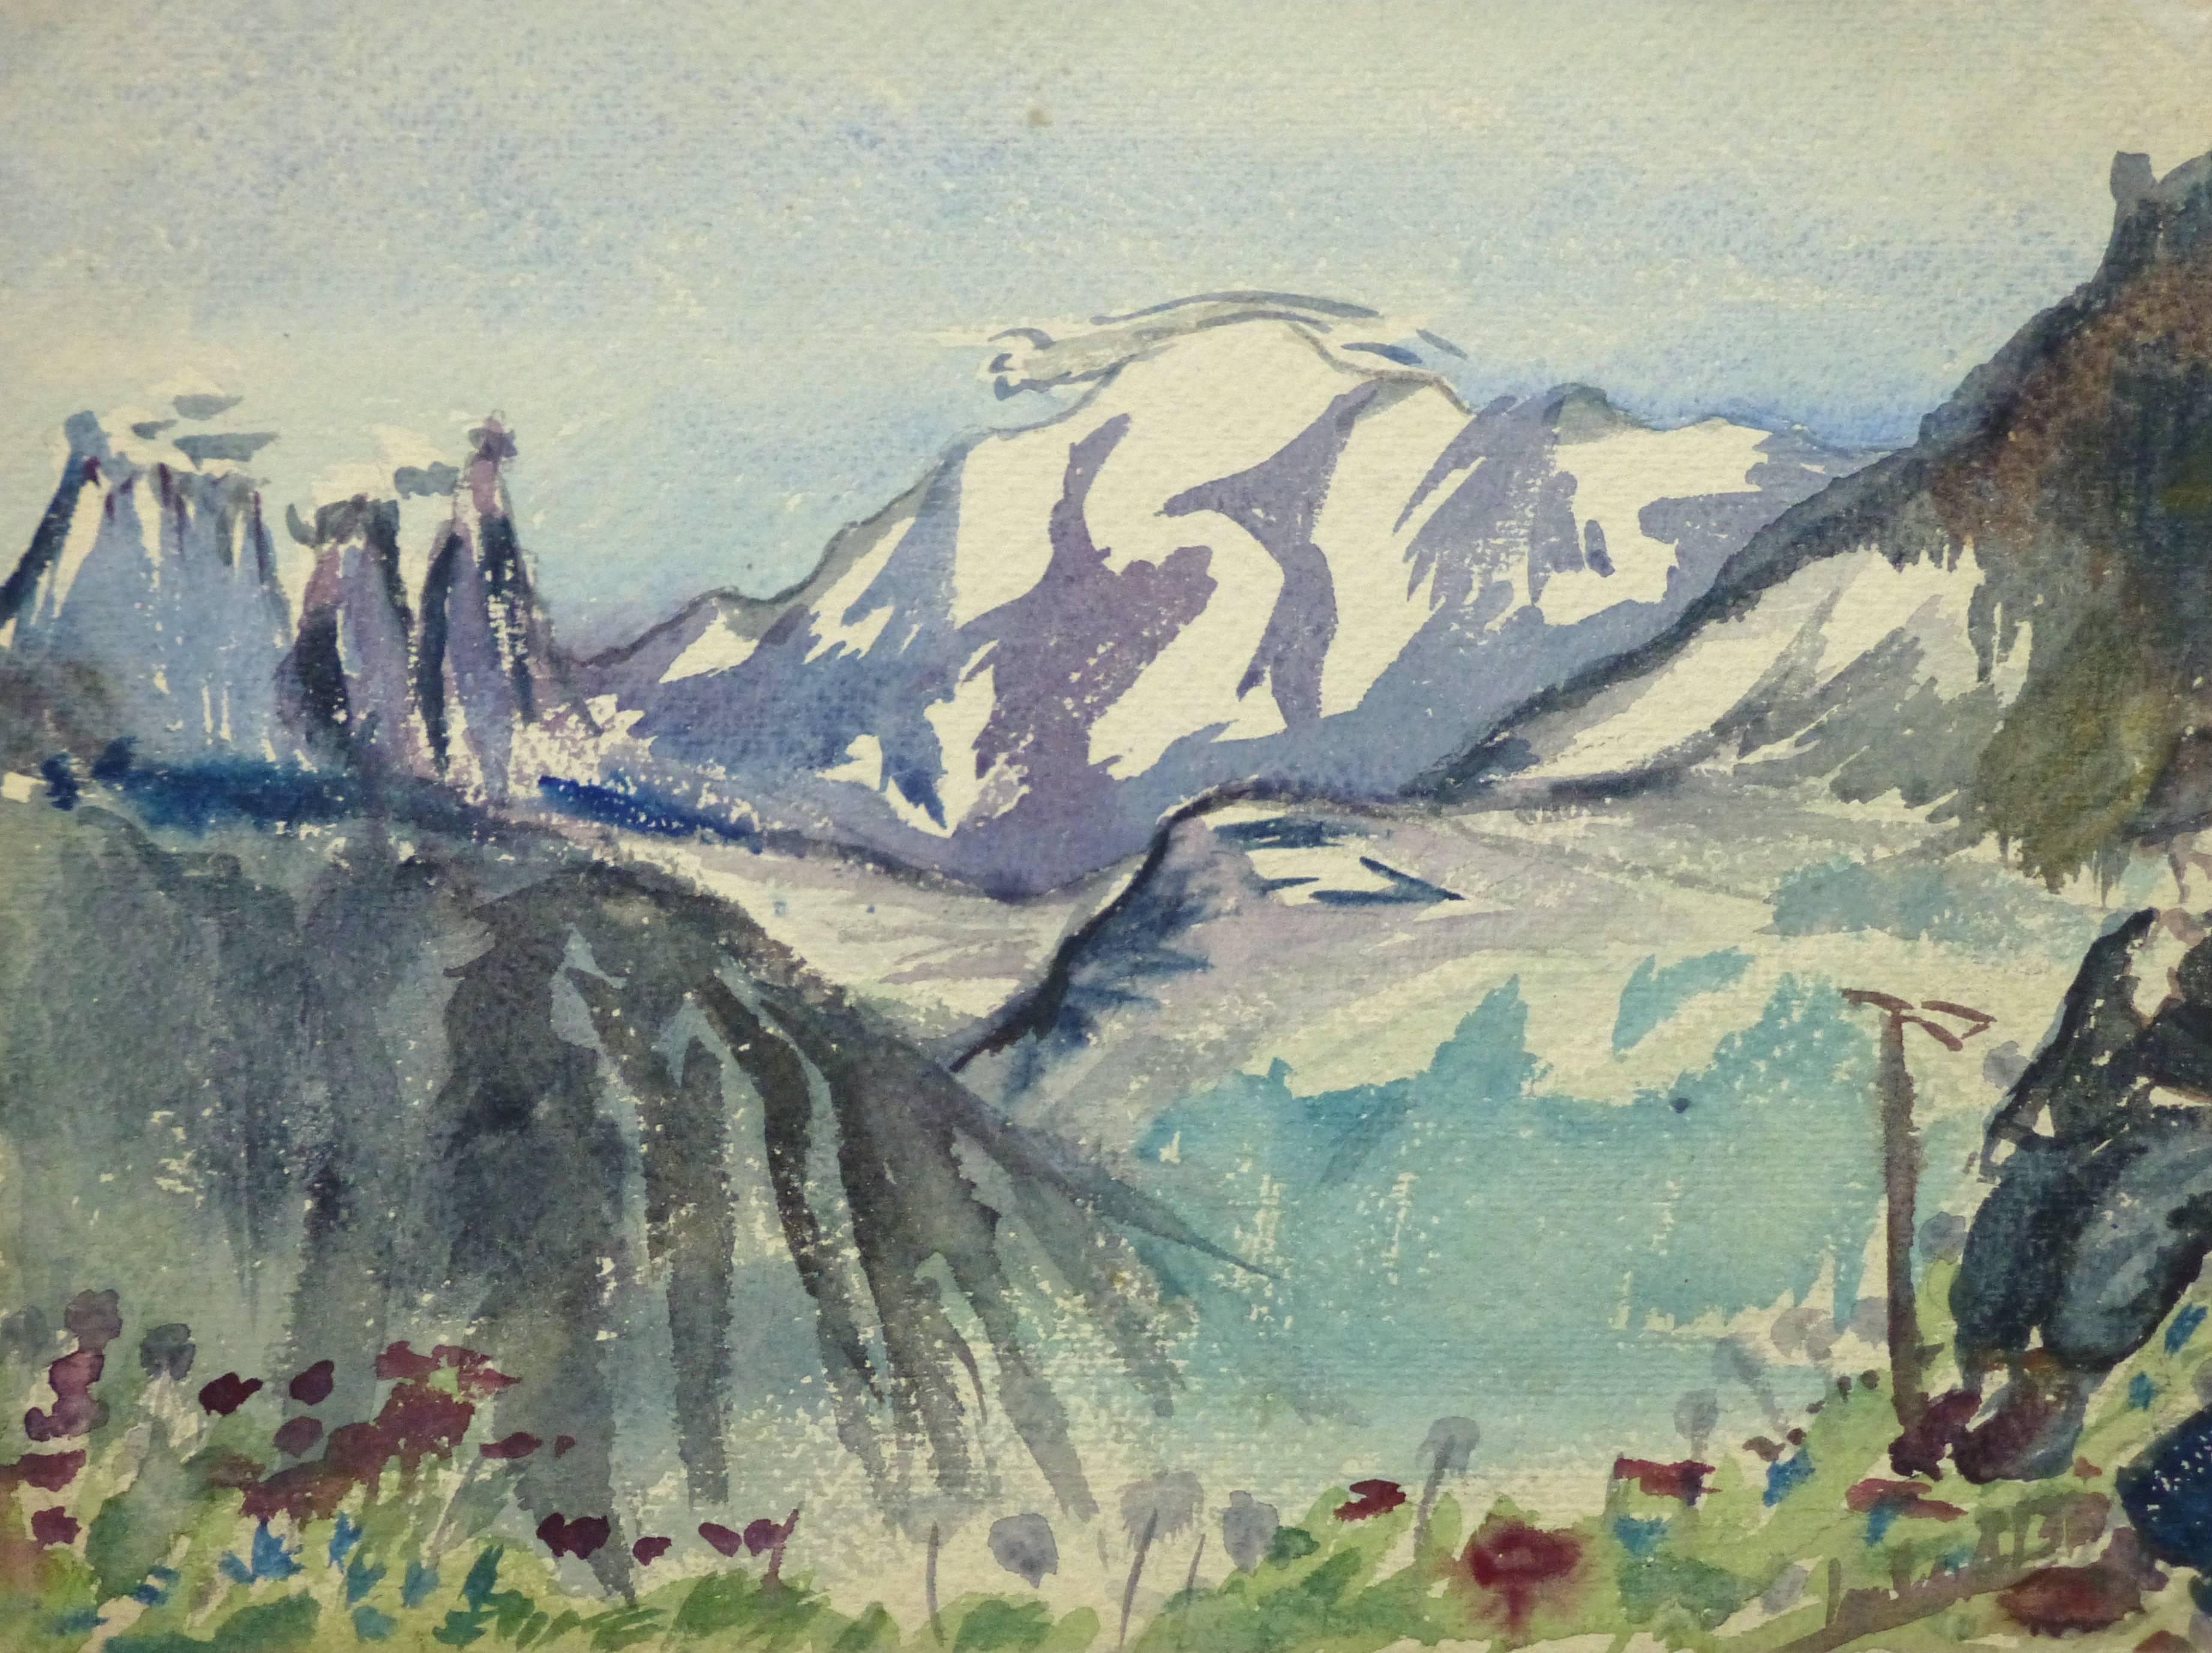 Unknown Landscape Art - Vintage French Watercolor Landscape - Wintry Mountain Range Overlooking Meadow